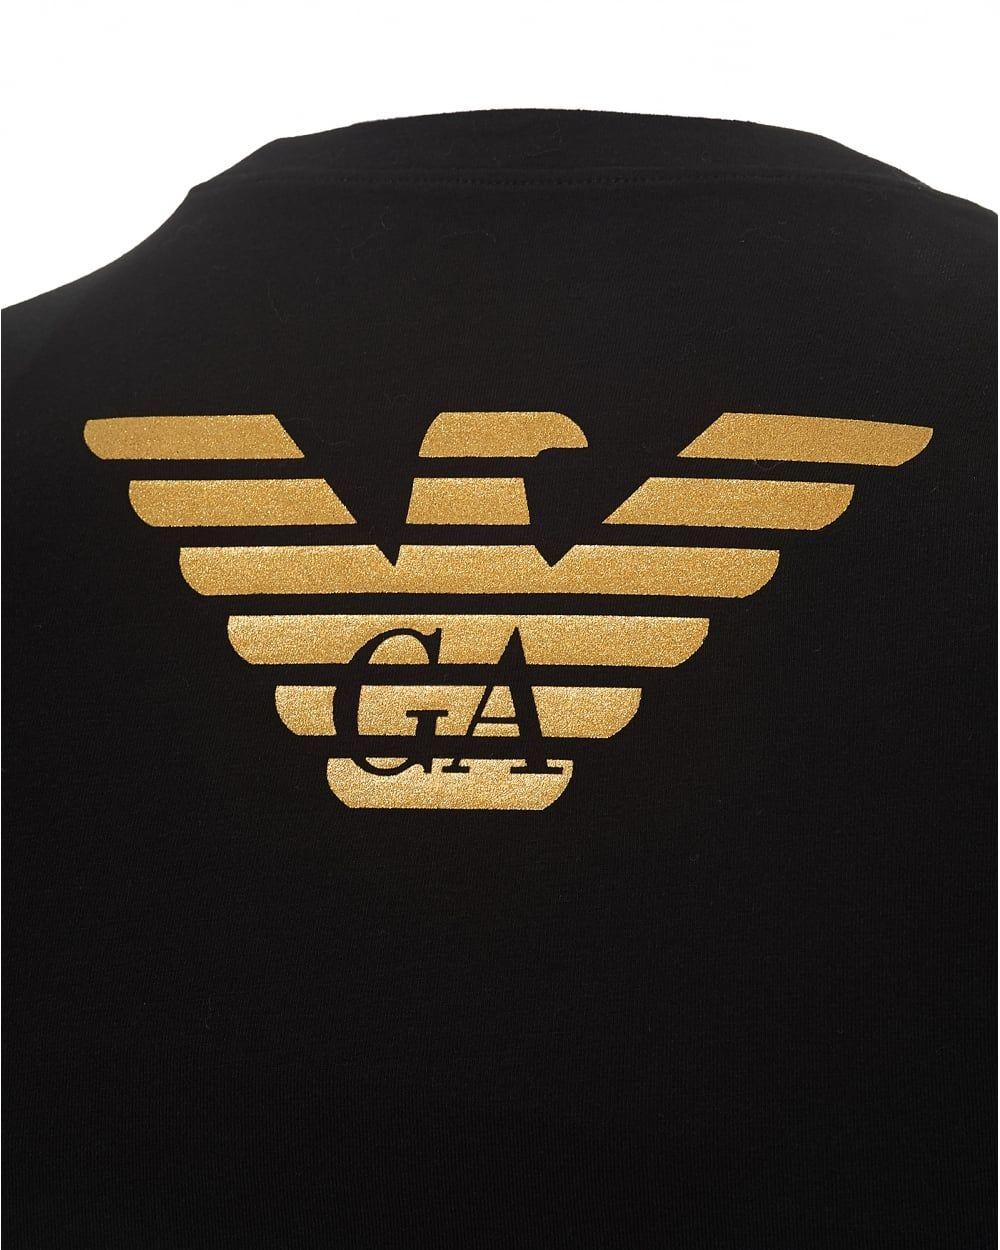 Emporio Armani Logo - Emporio Armani Mens Metal Eagle T-Shirt, Large Back Logo Black Tee ...